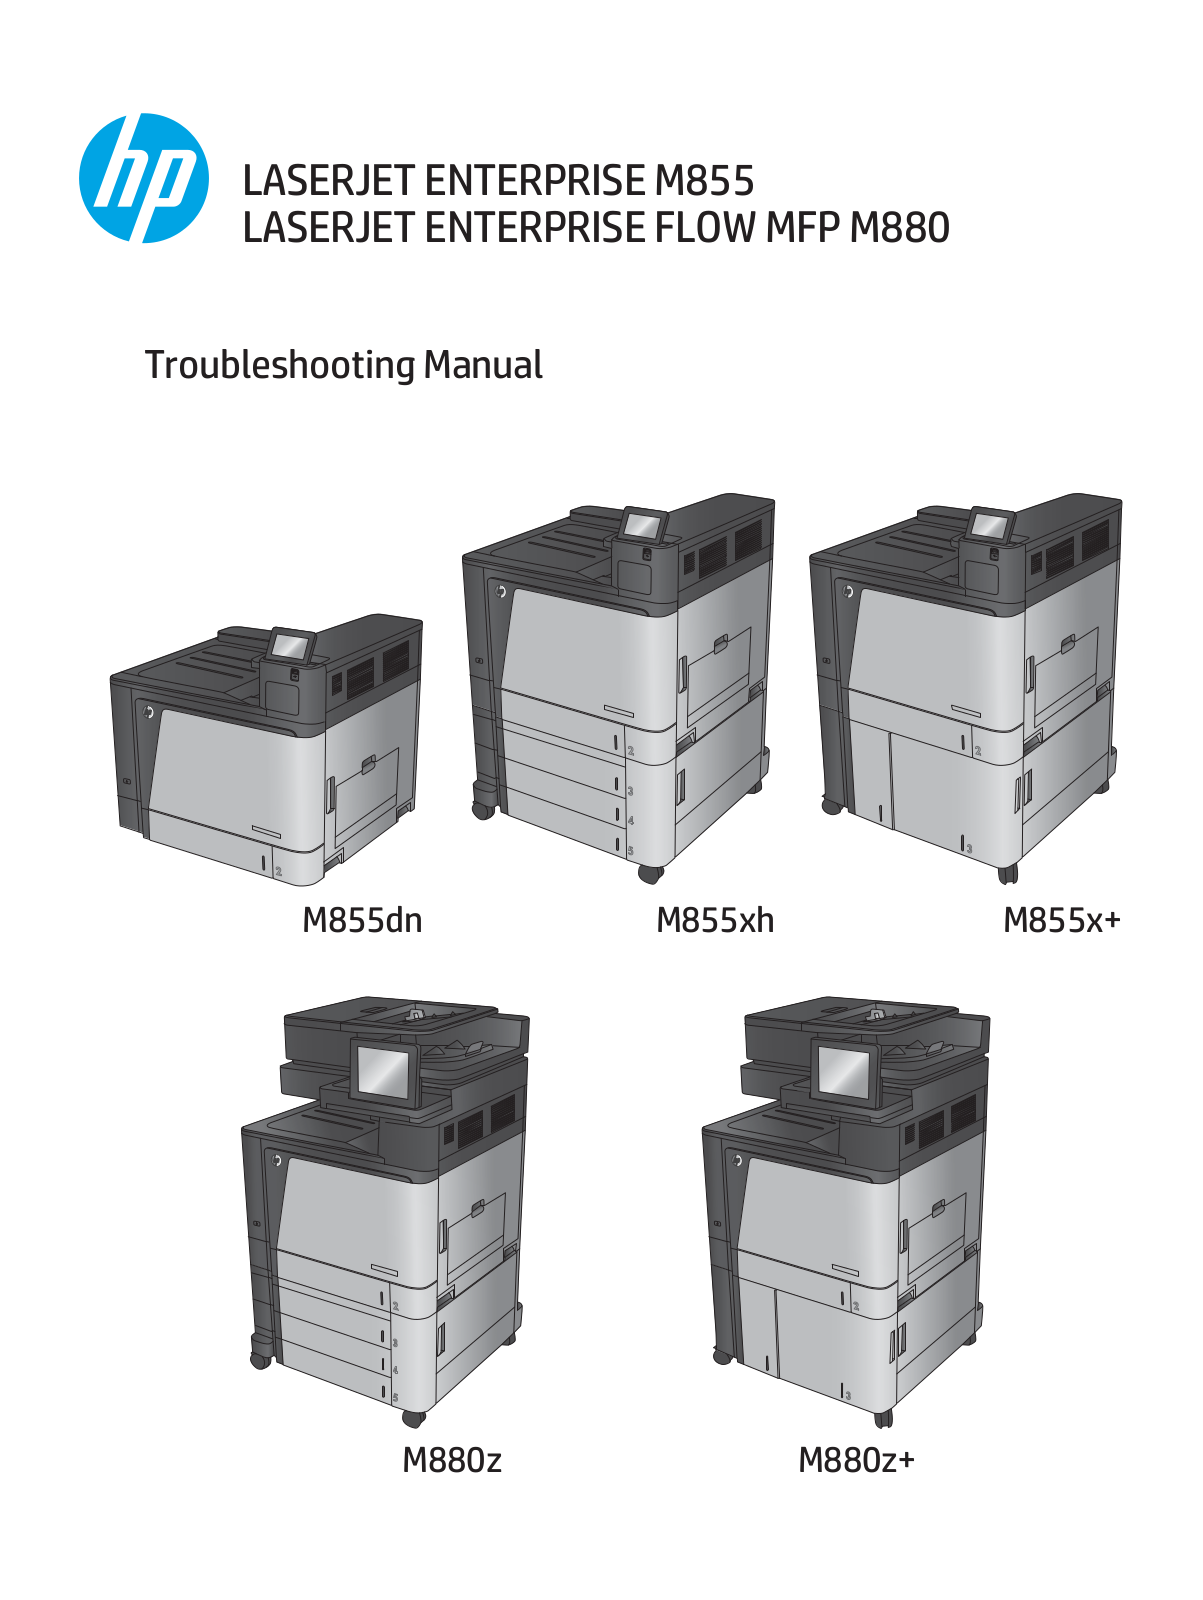 HP Color LaserJet Enterprise M855, Color LaserJet Enterprise flow MFP M880 Troubleshooting Manual